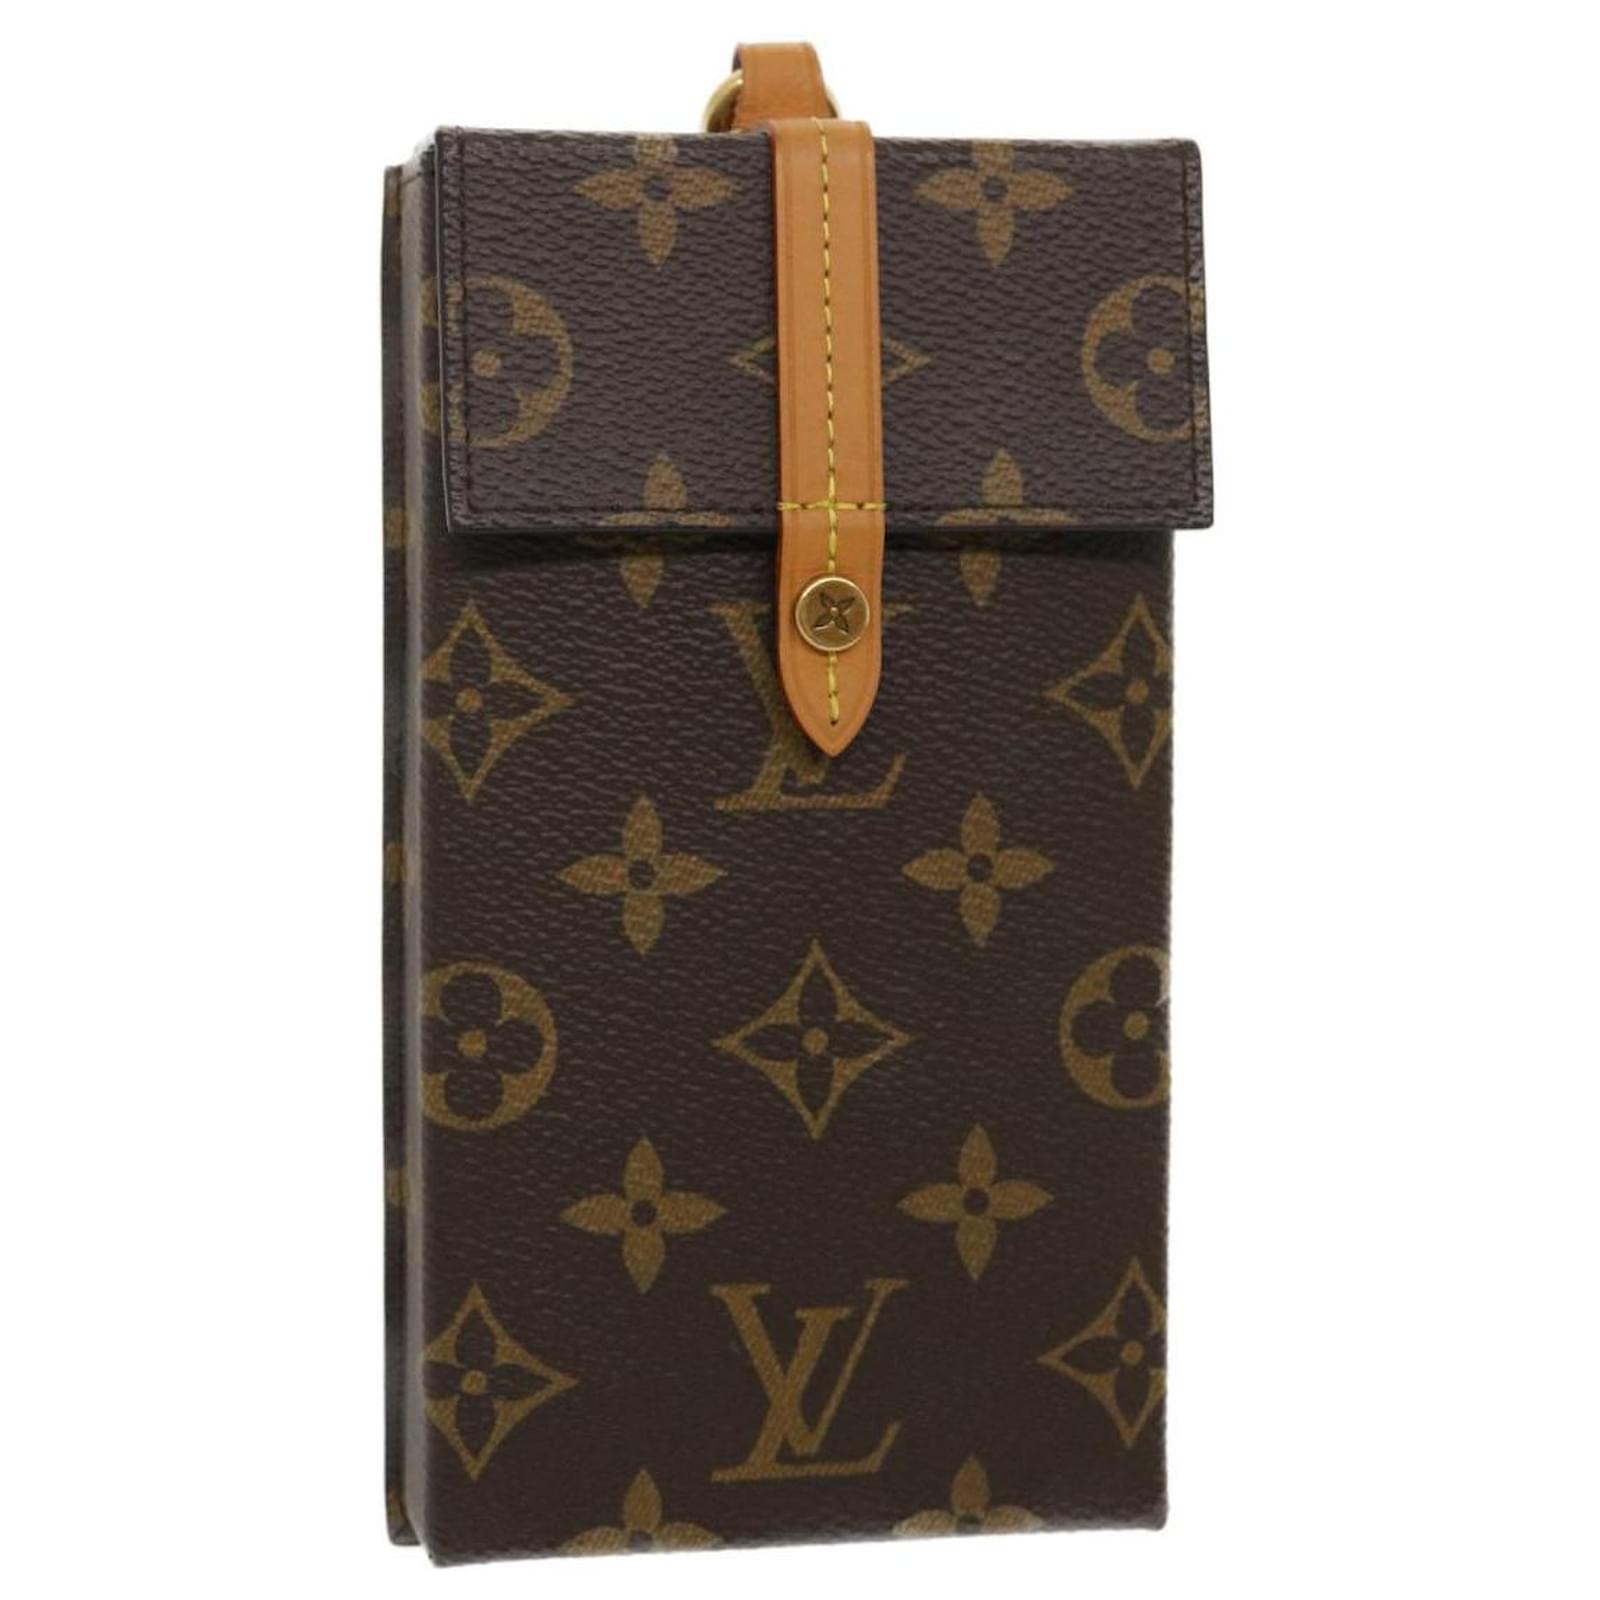 Louis Vuitton Cell Phone Case